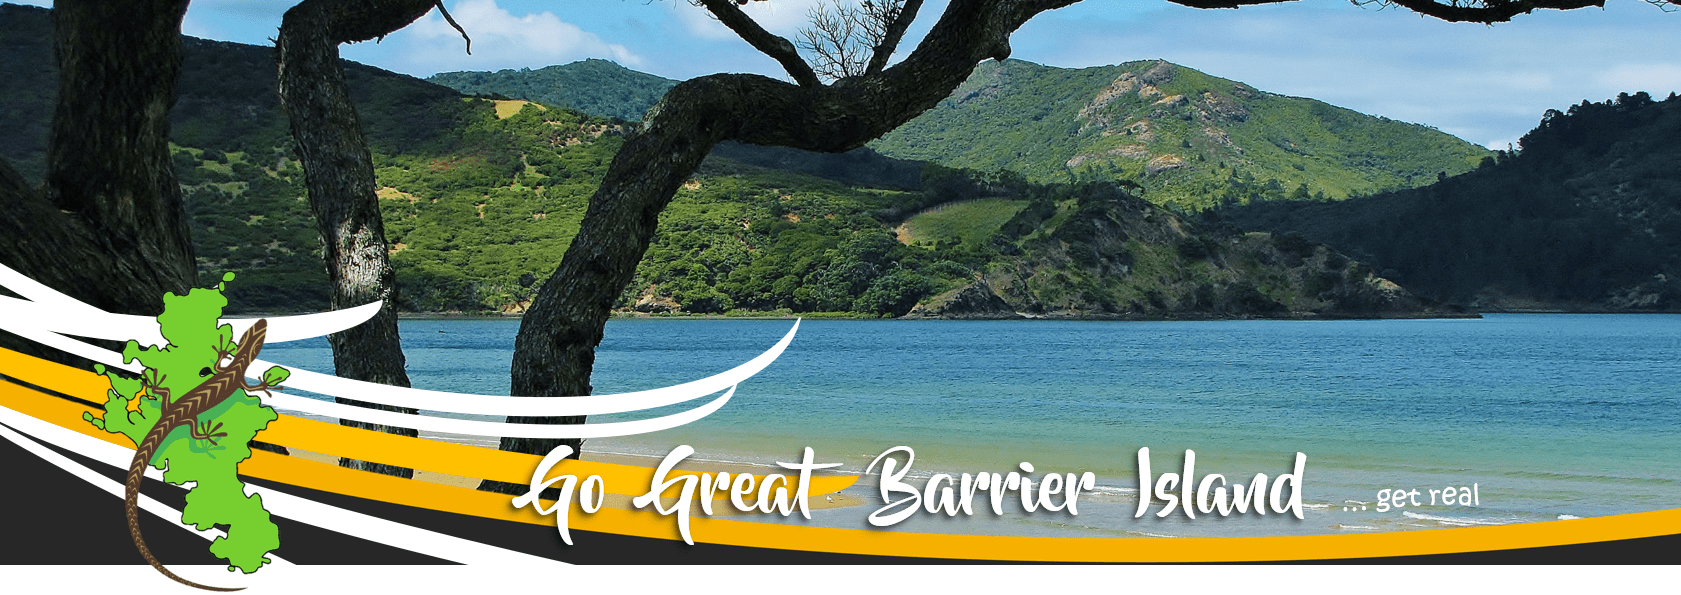 Go Great Barrier Island